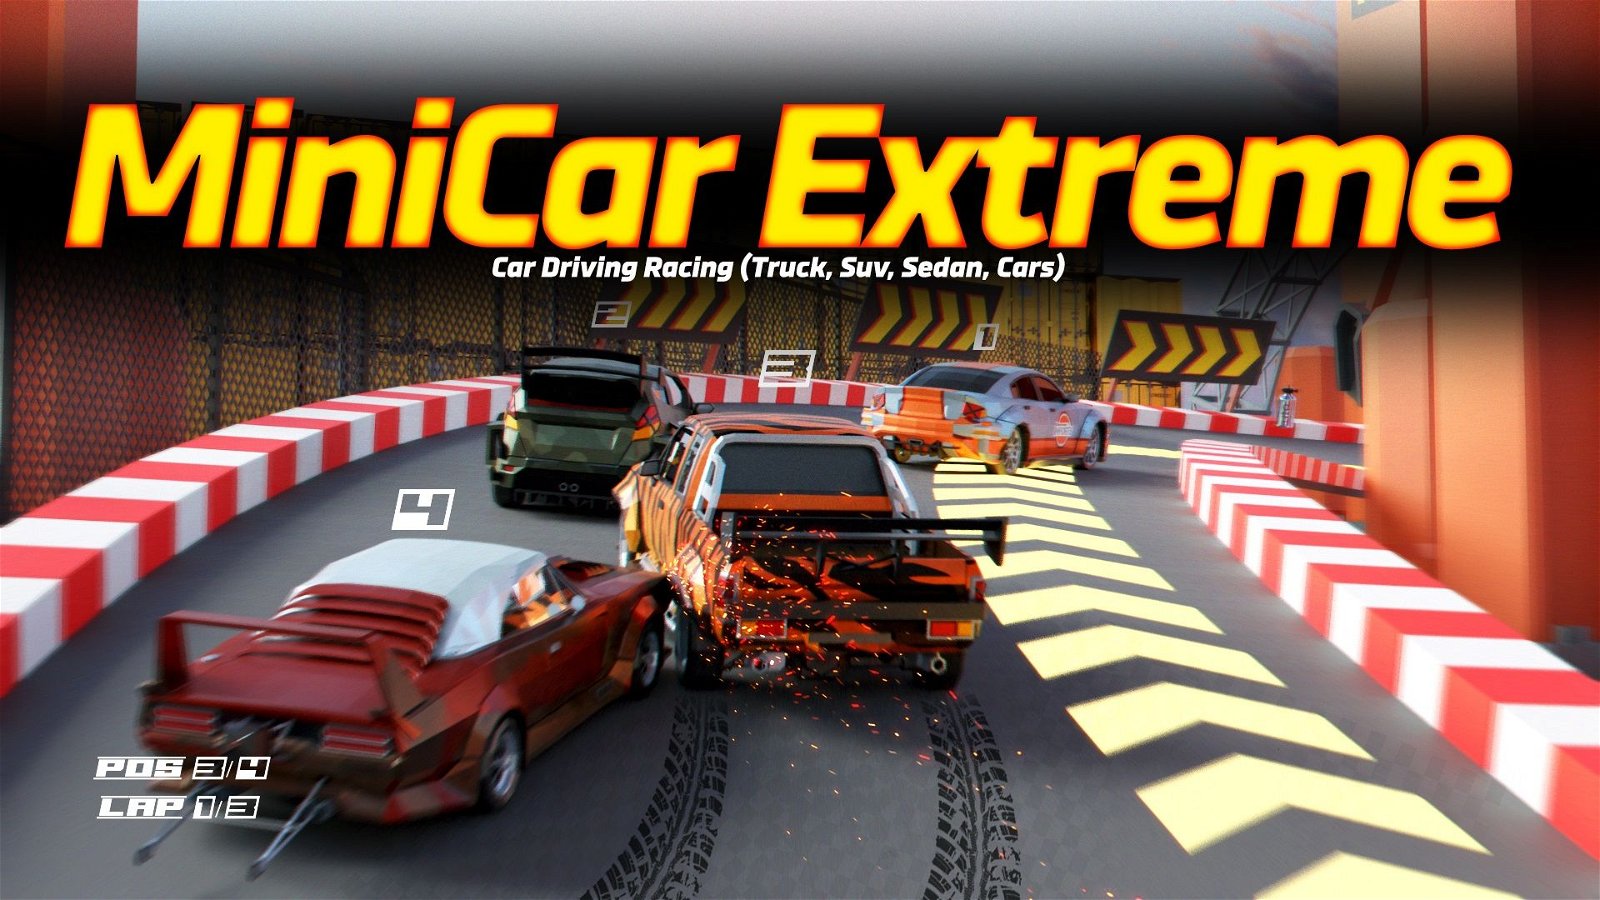 Image of MiniCar Extreme Car Driving Racing (Truck, Suv, Sedan, Cars)